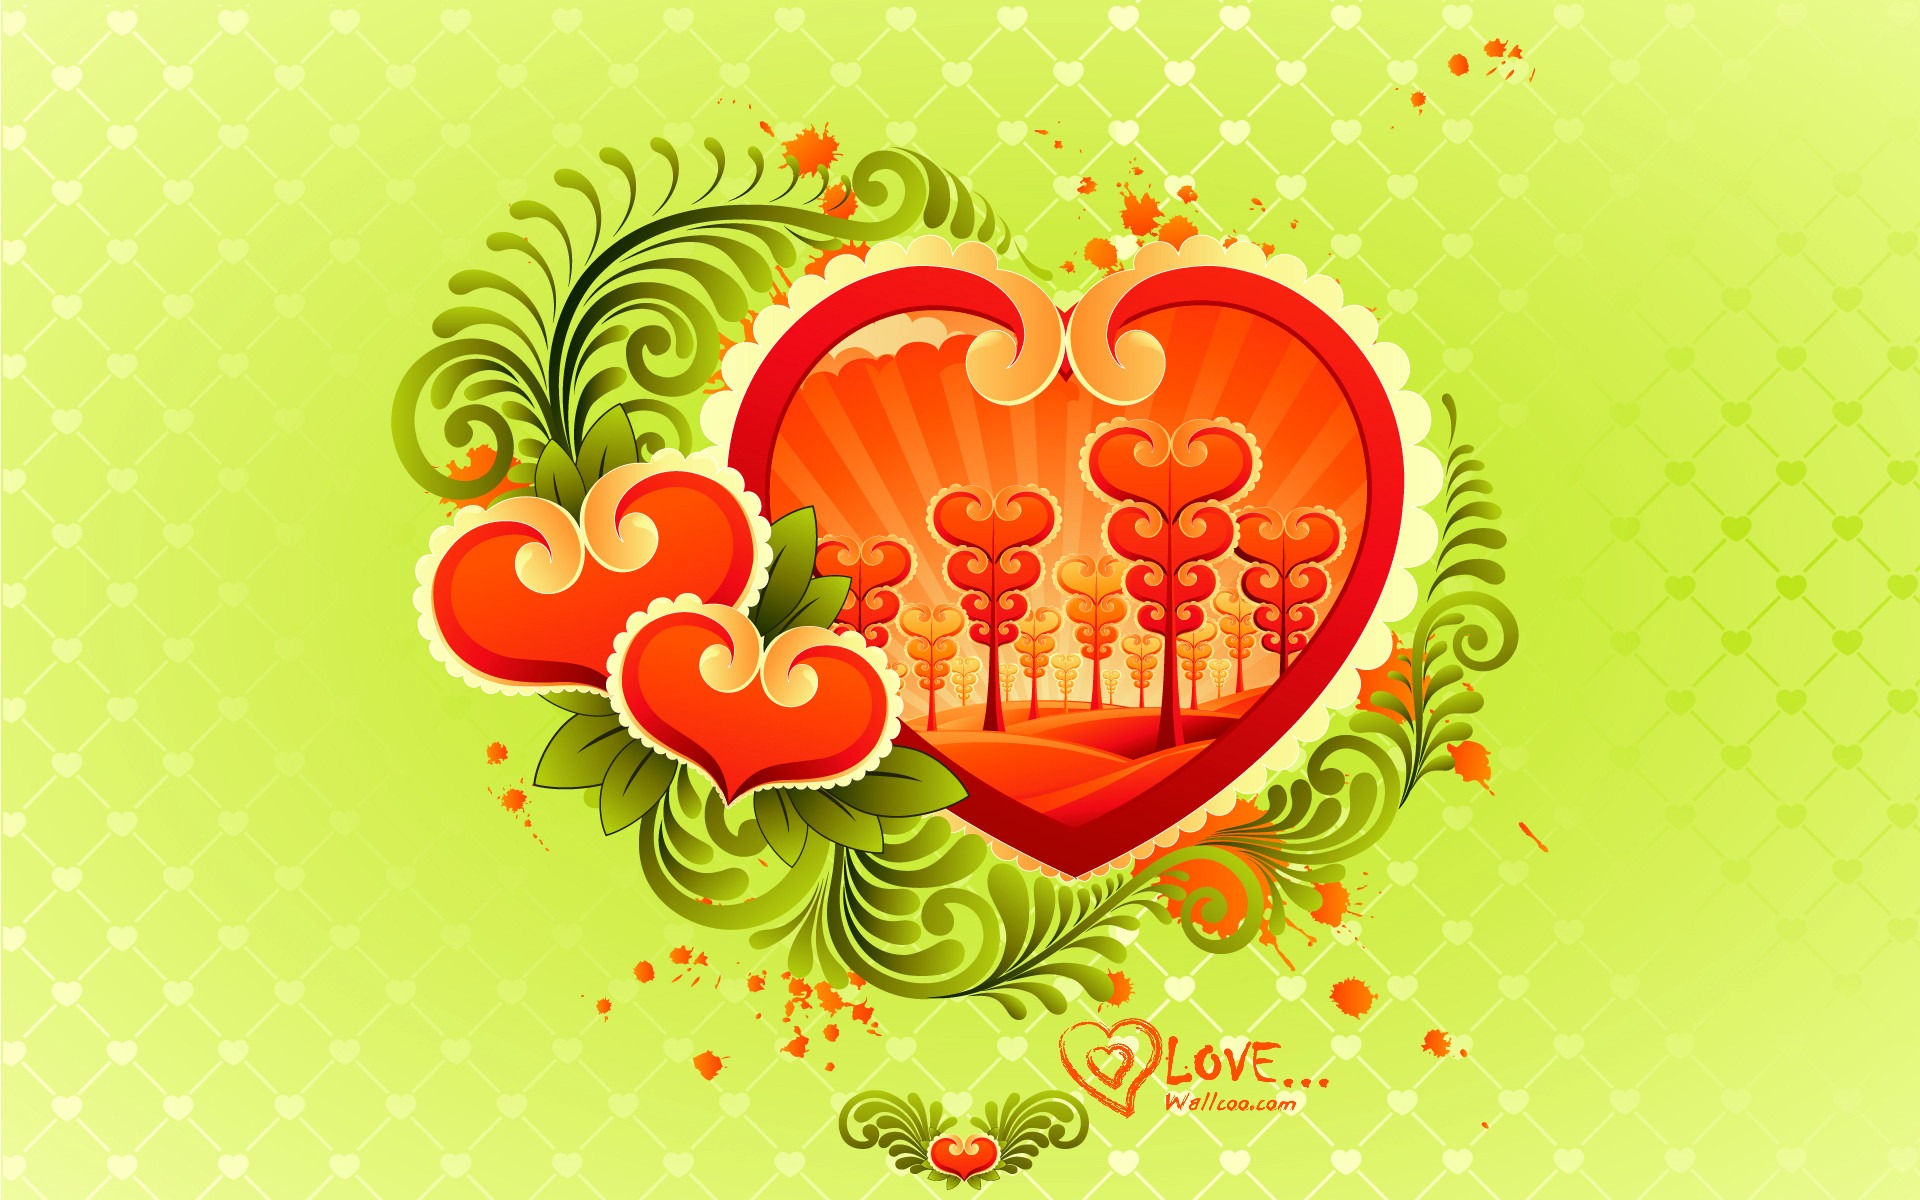 colorful love Day wallpaper illustration design